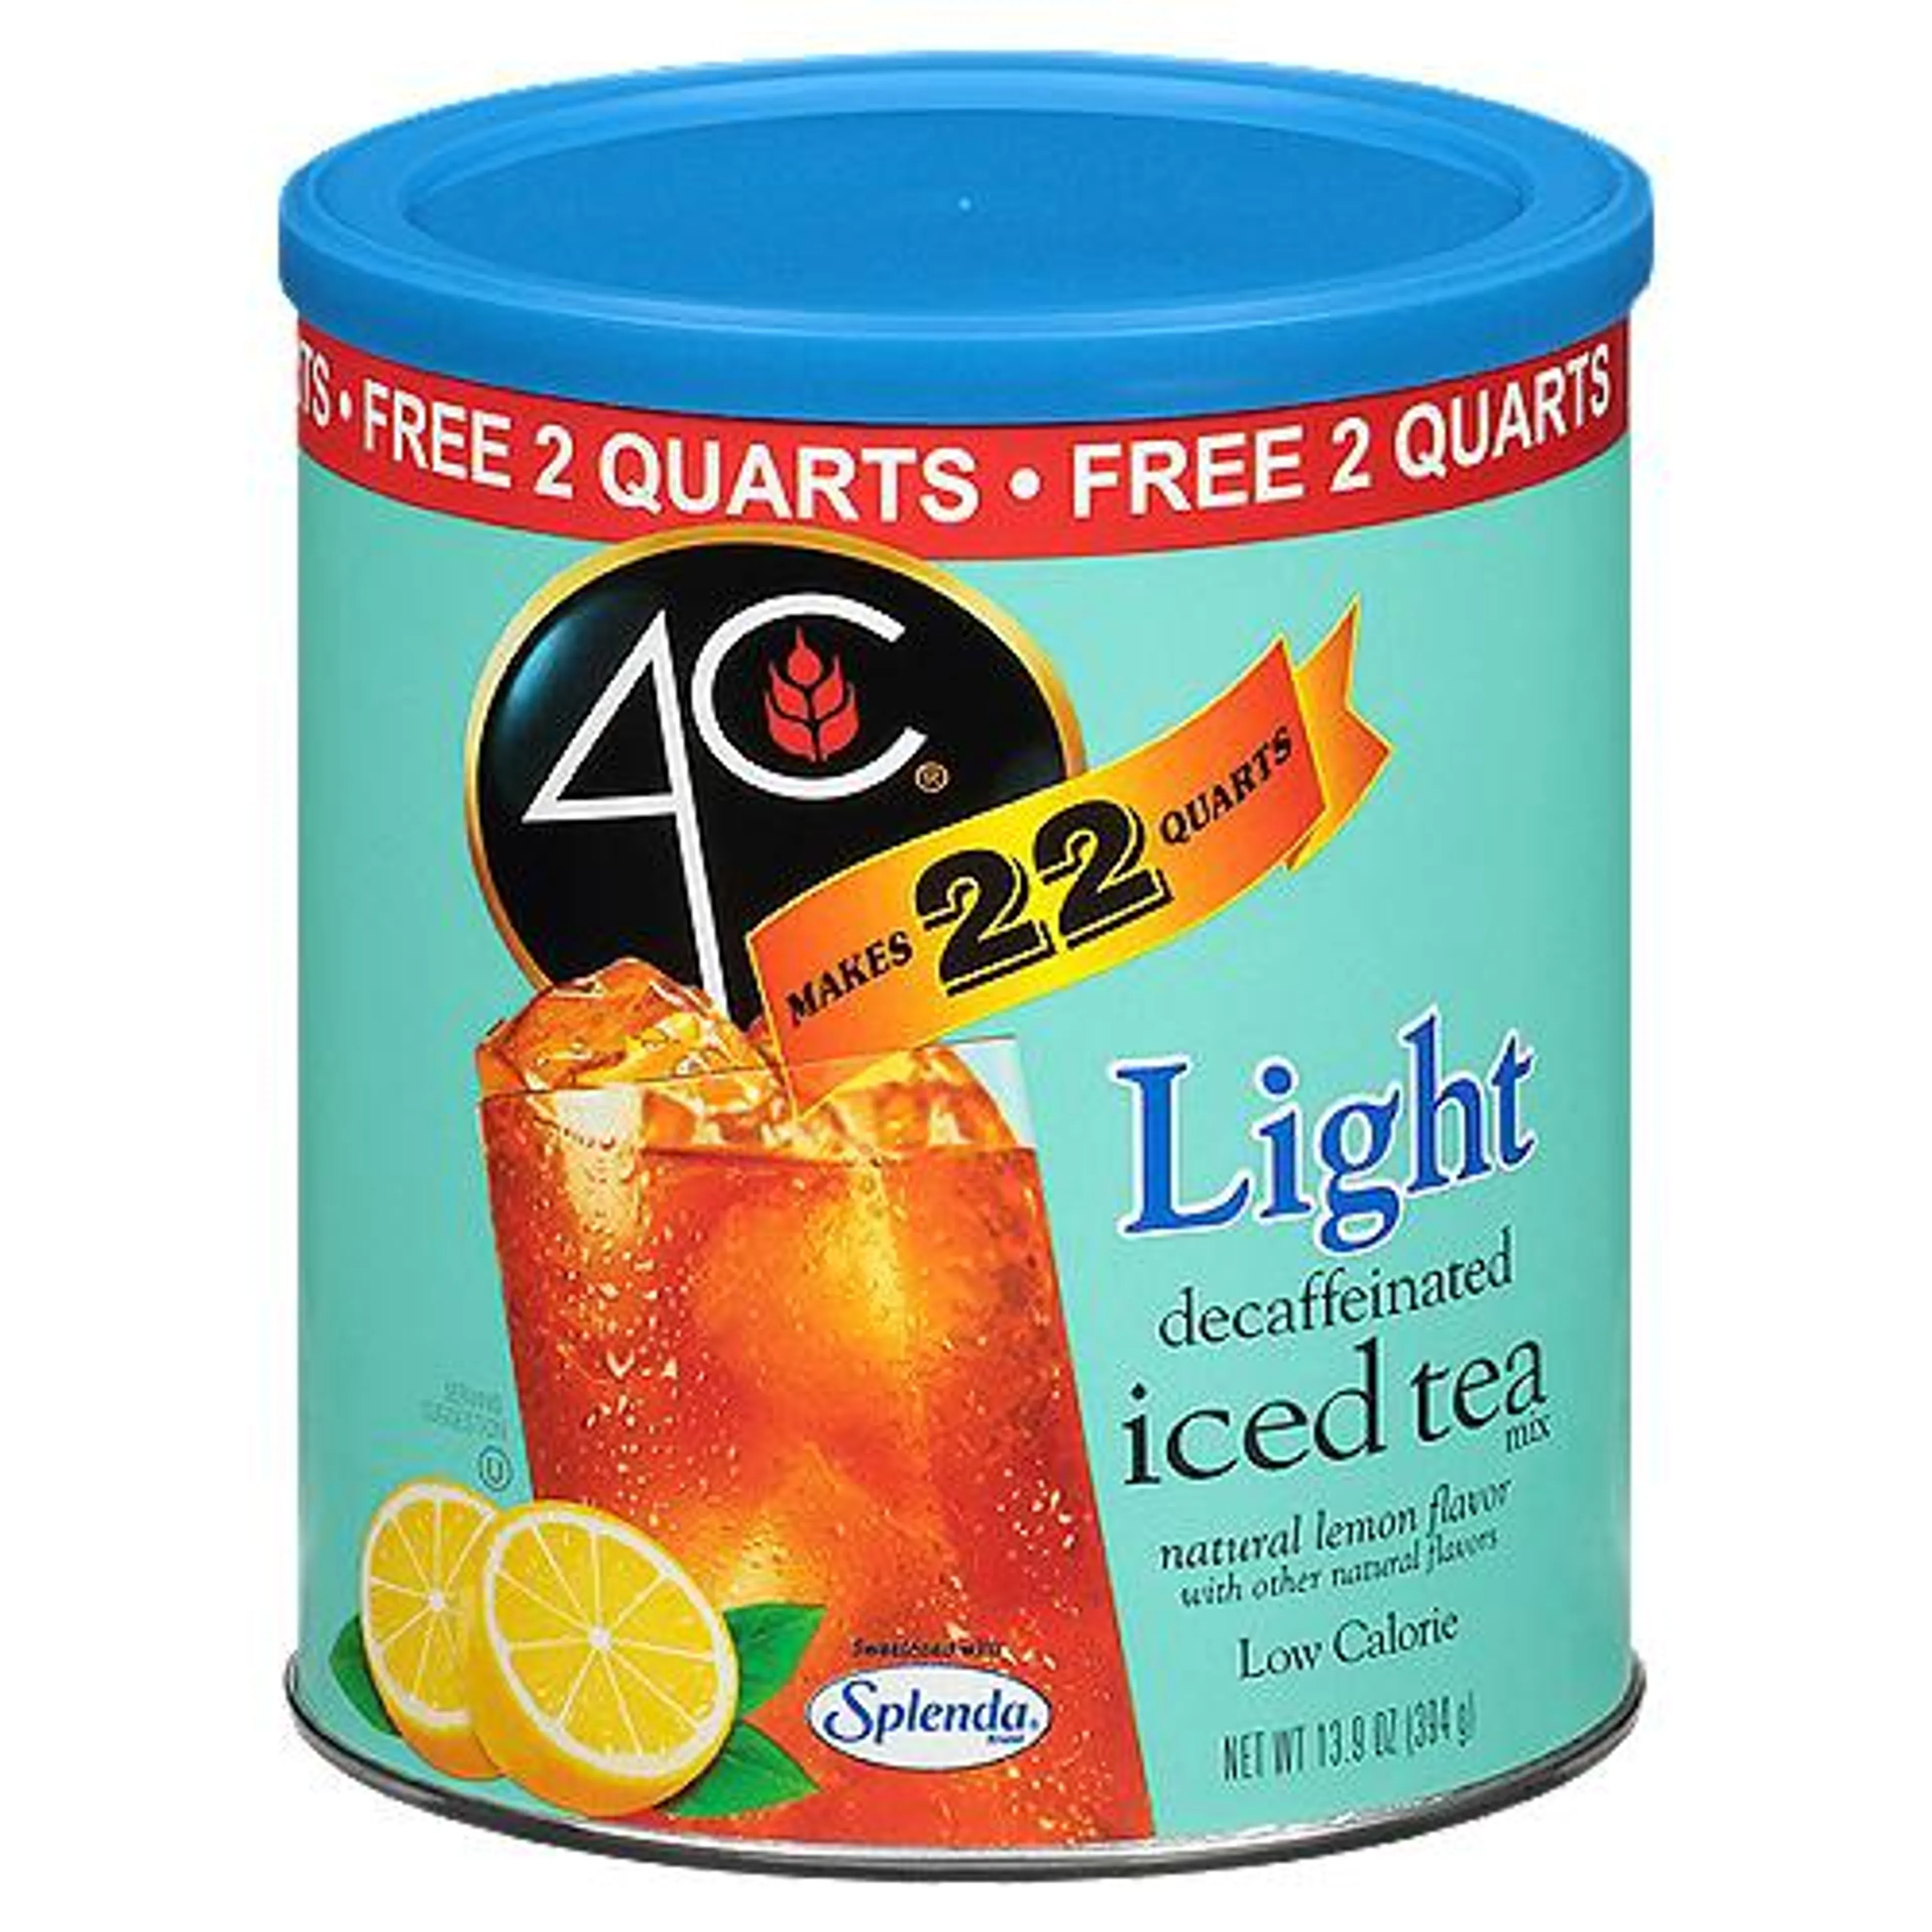 4C Natural Lemon Flavor Light Decaffeinated, Iced Tea Mix, 13.9 Ounce